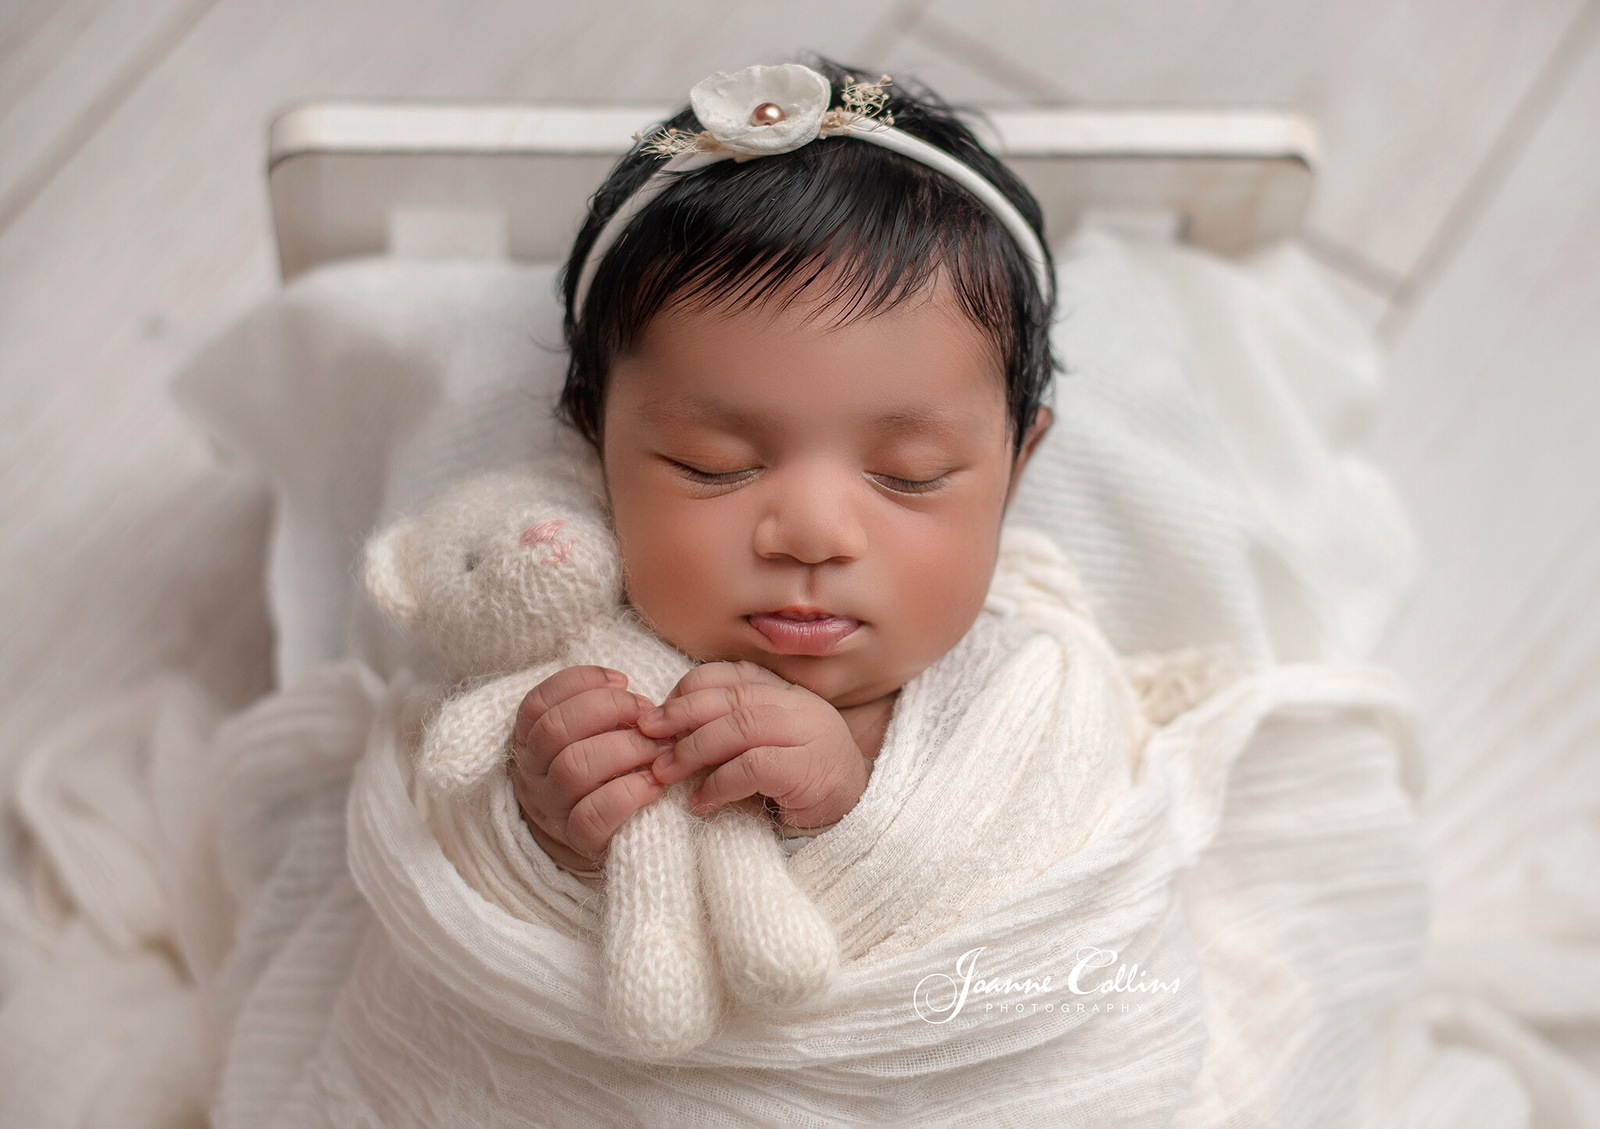 newborn photographer sittingbourne baby girl 9 days new in cute white bed